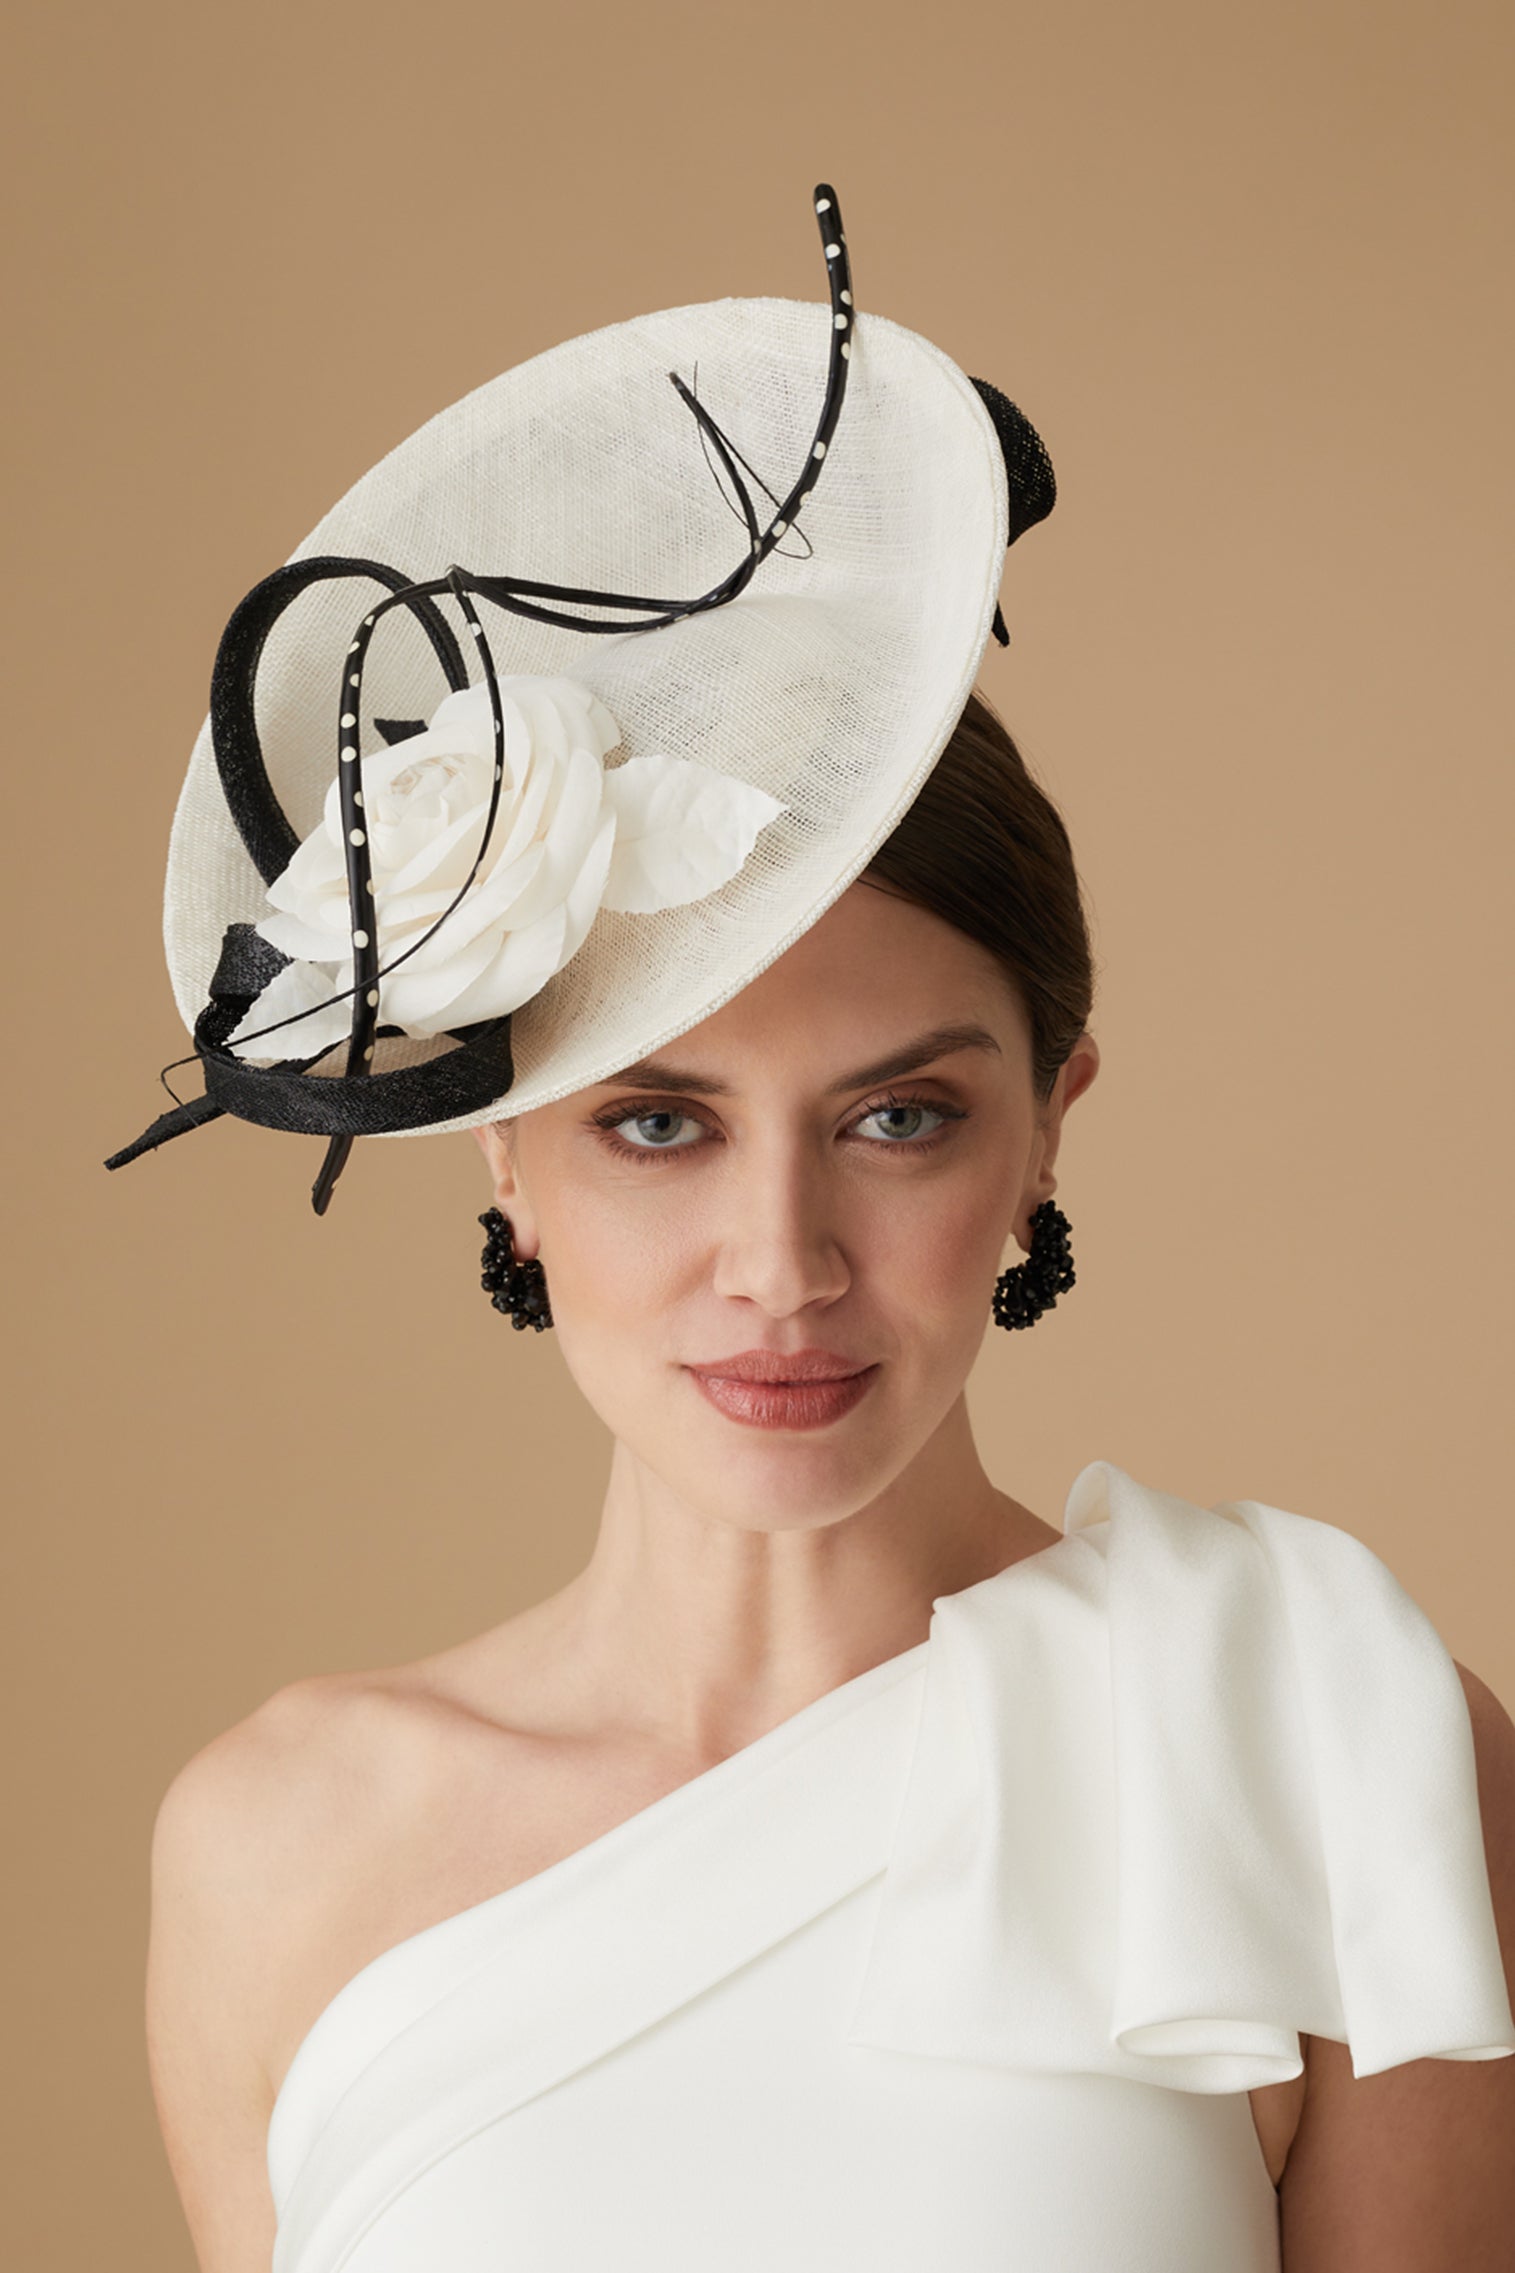 Assam White and Black Saucer Hat - New Season Women's Hats - Lock & Co. Hatters London UK